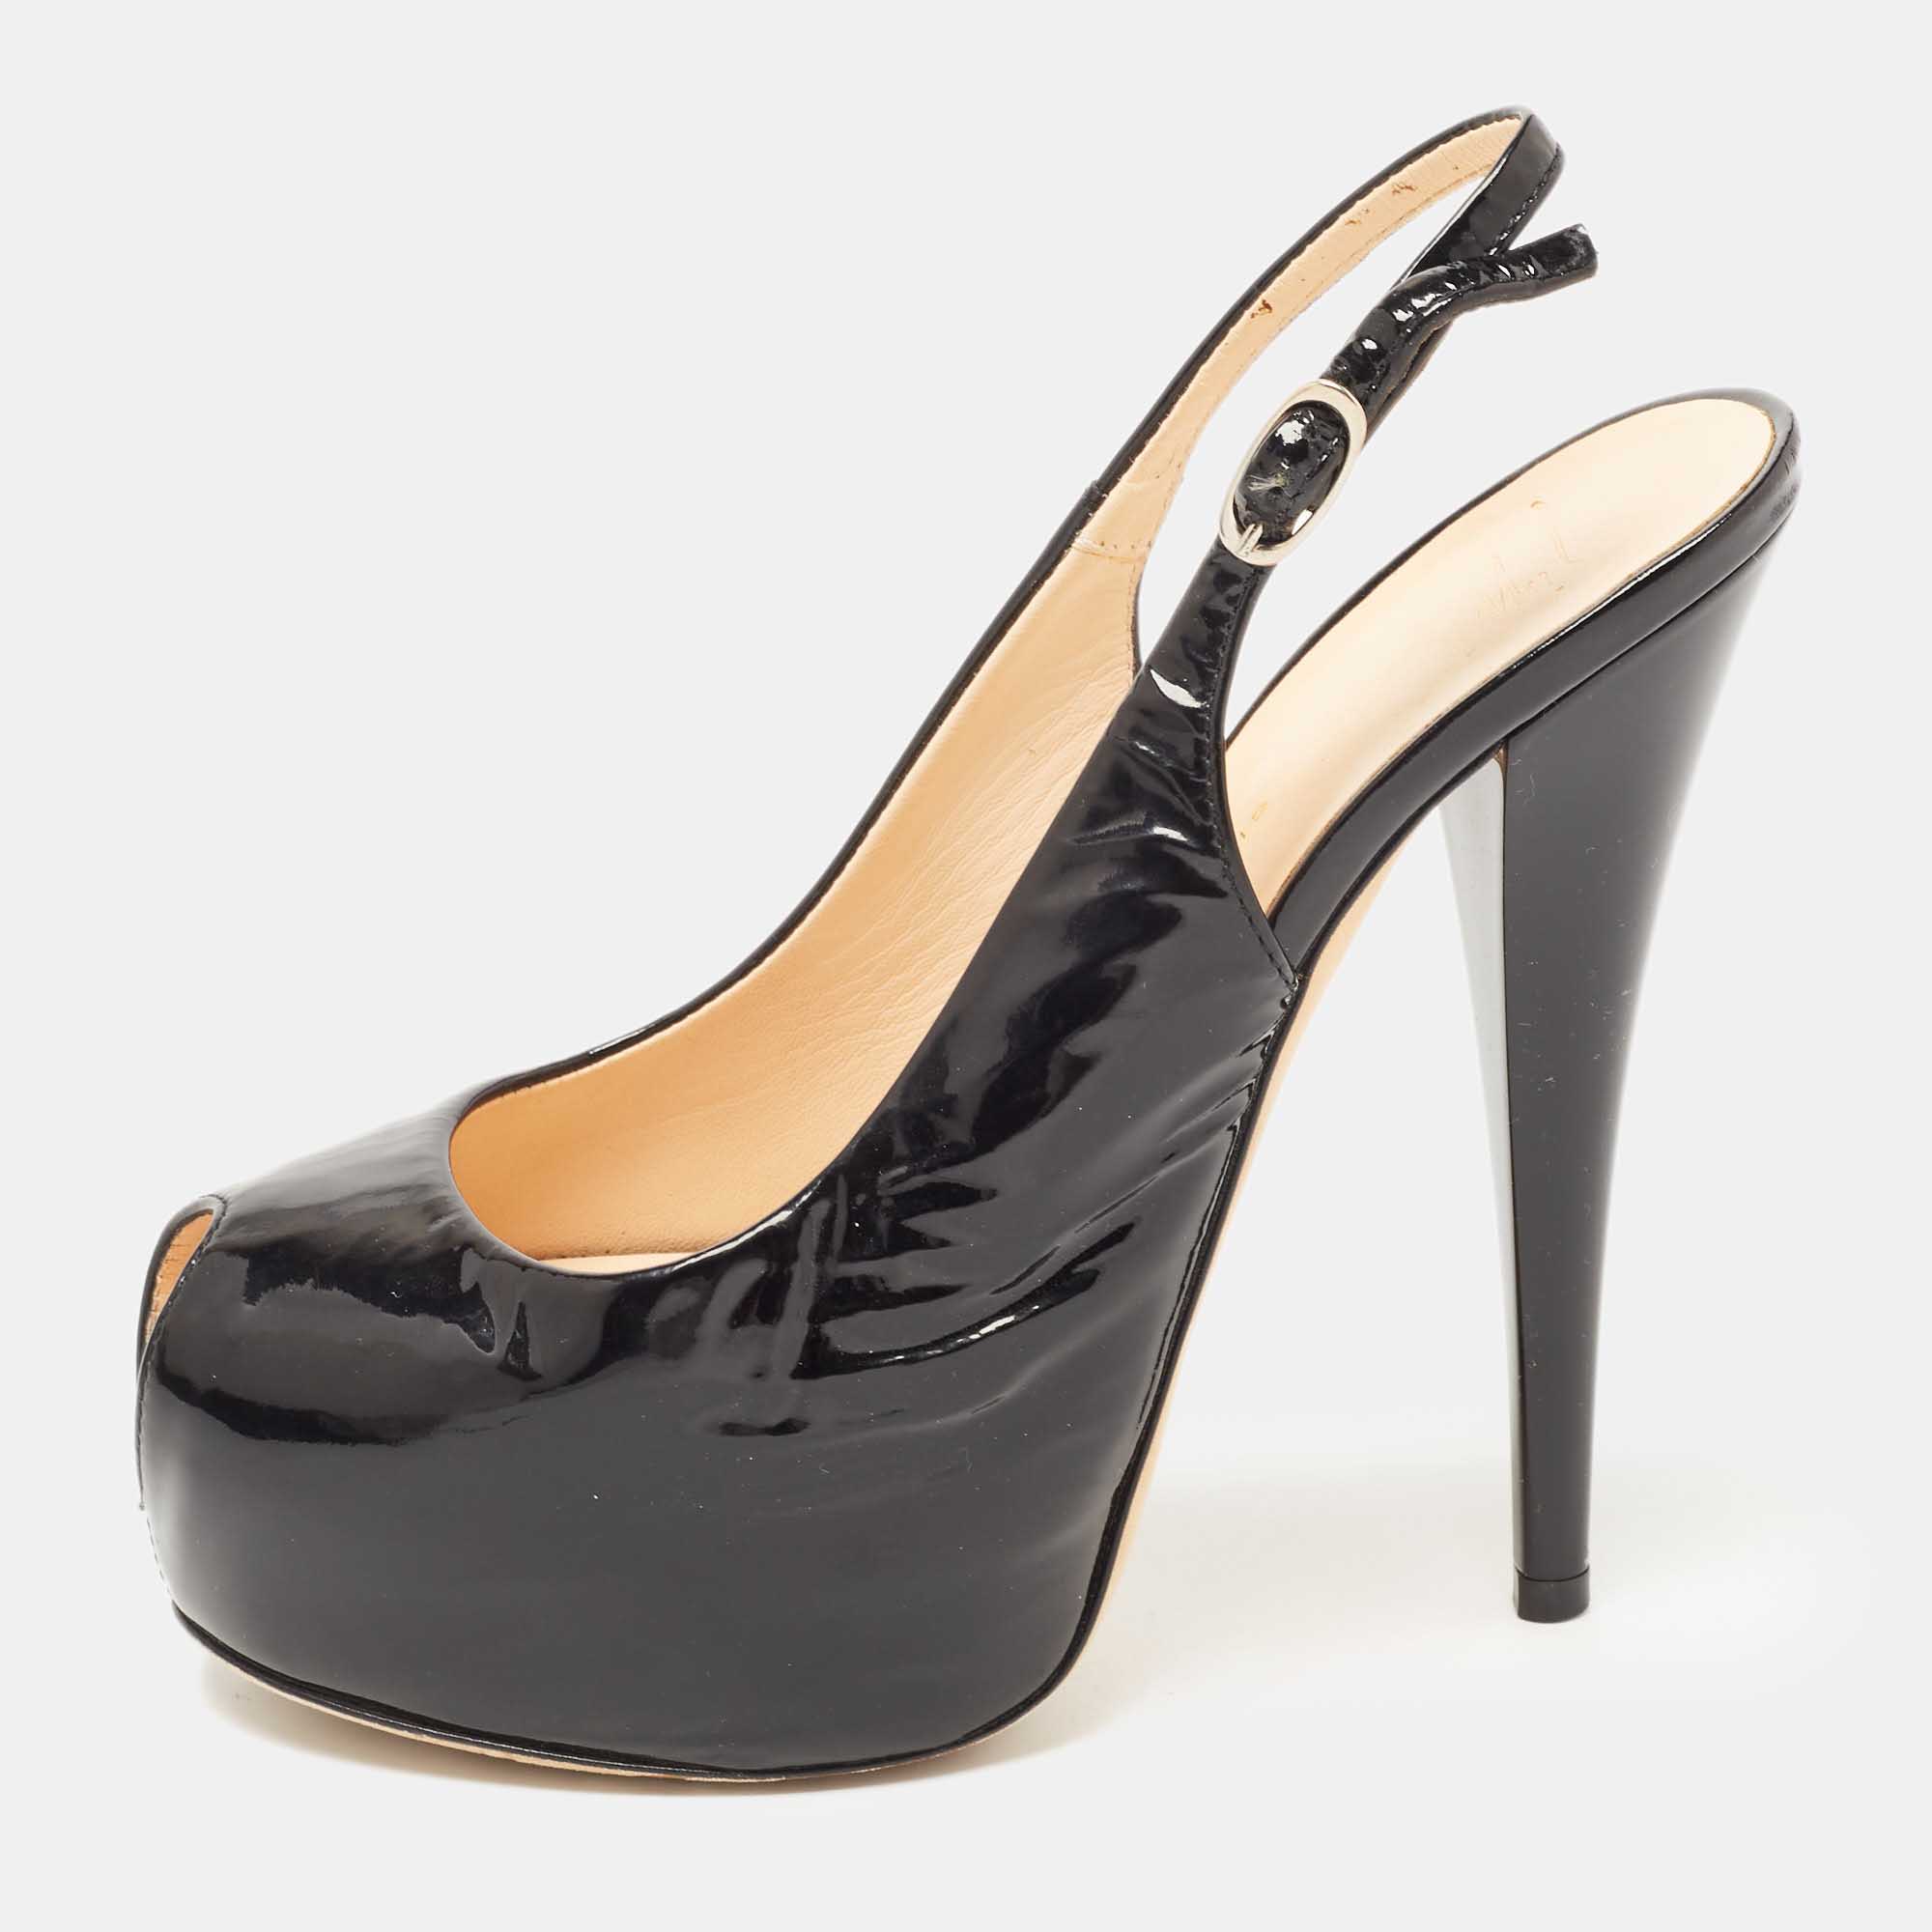 Giuseppe zanotti black patent leather peep toe platform slingback pumps size 36